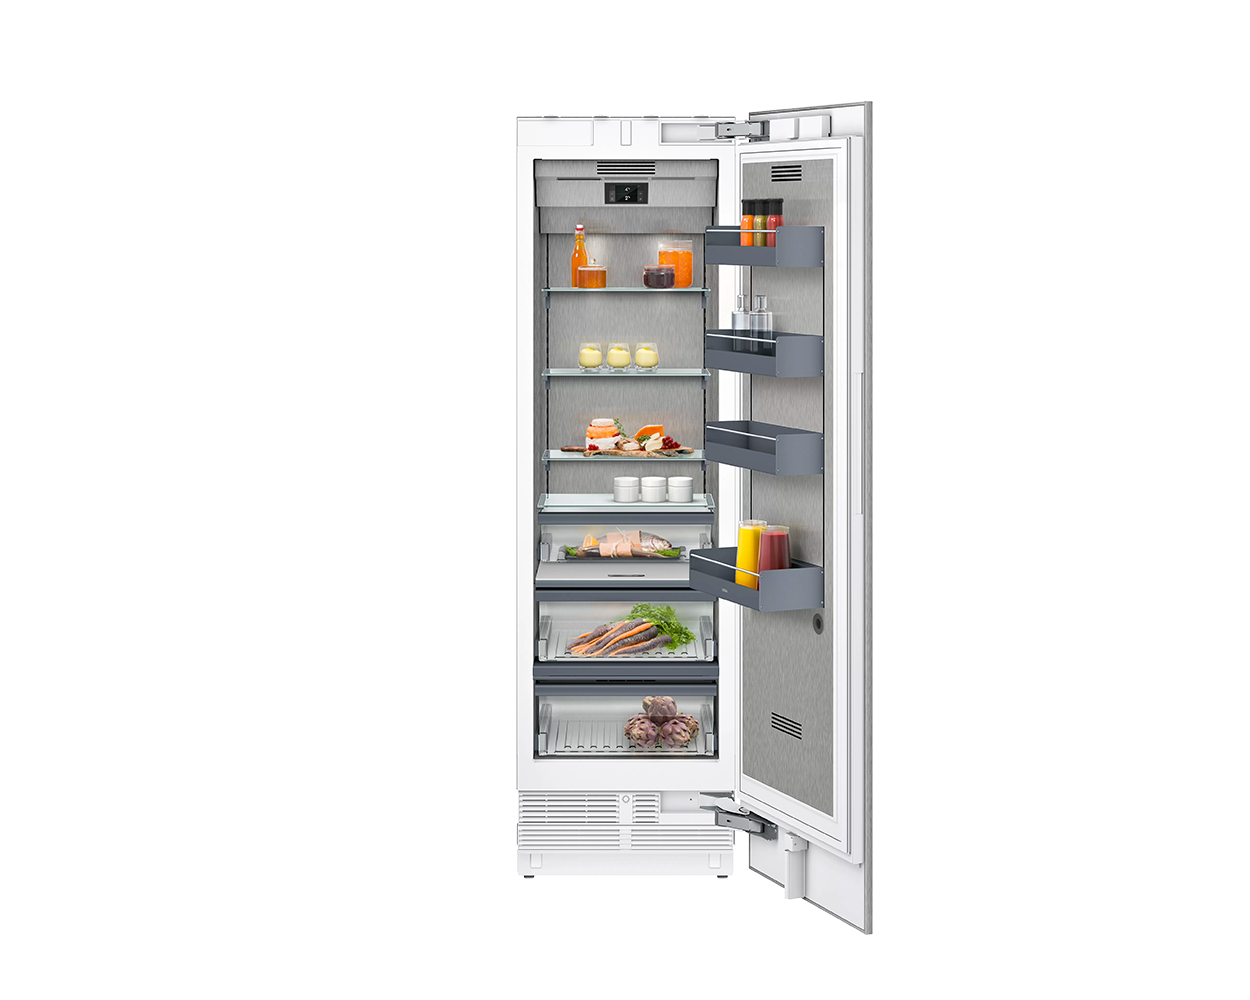 Luxury kitchen appliance brand Gaggenau 400 series Free standing / Integrated Refrigerator / Fridge . Buy in the UK with Krieder.